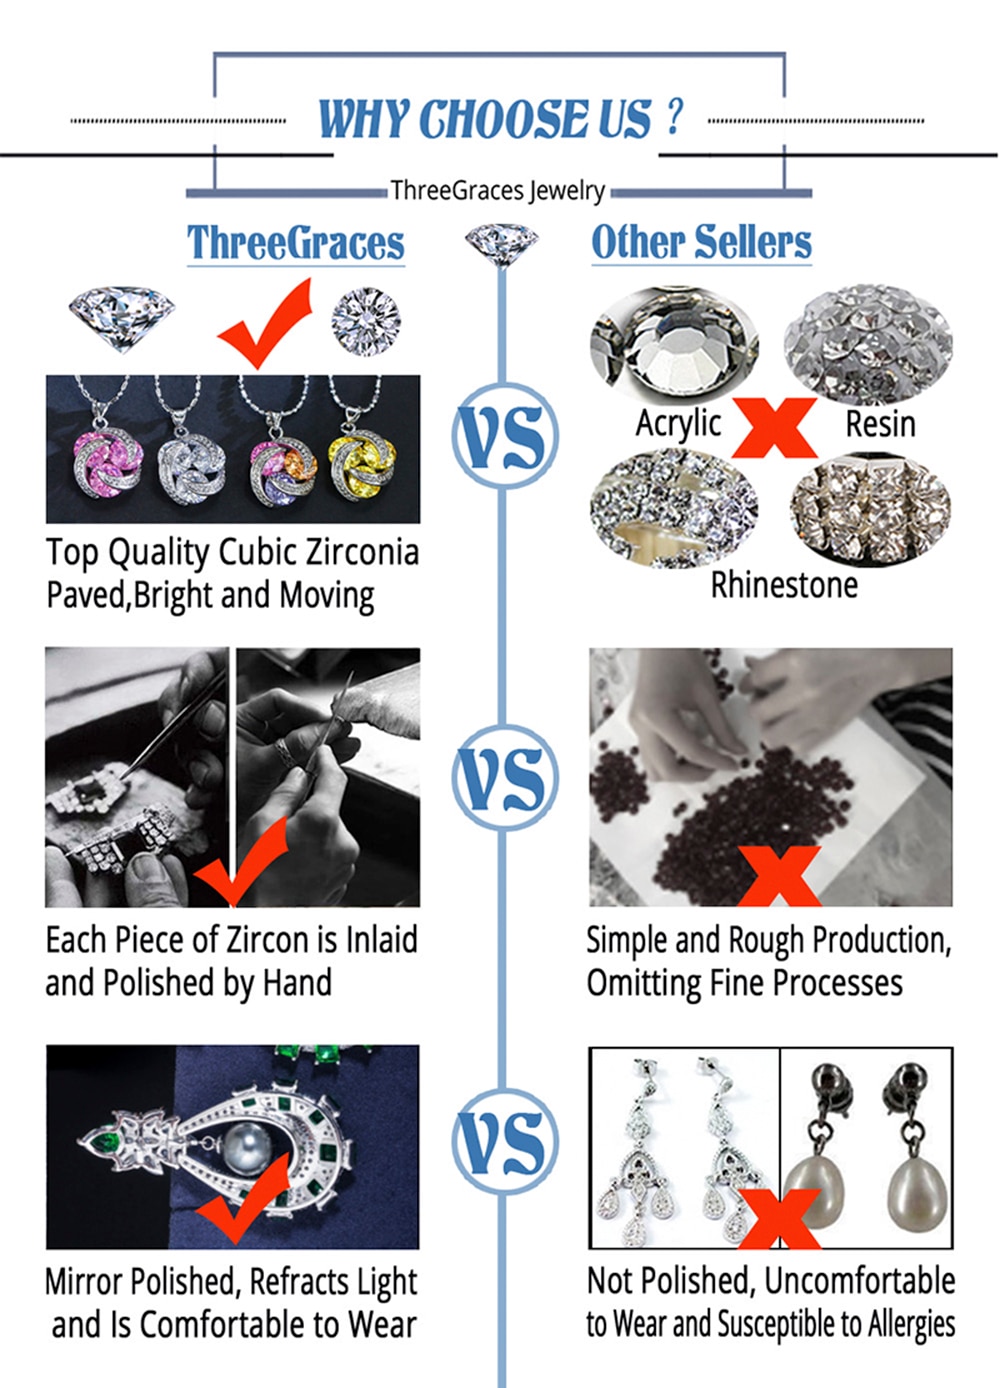 ThreeGraces-Shiny-Cubic-Zirconia-Crystal-Silver-Color-Love-Heart-Earrings-Bracelet-Necklace-Wedding--1005001877860059-15